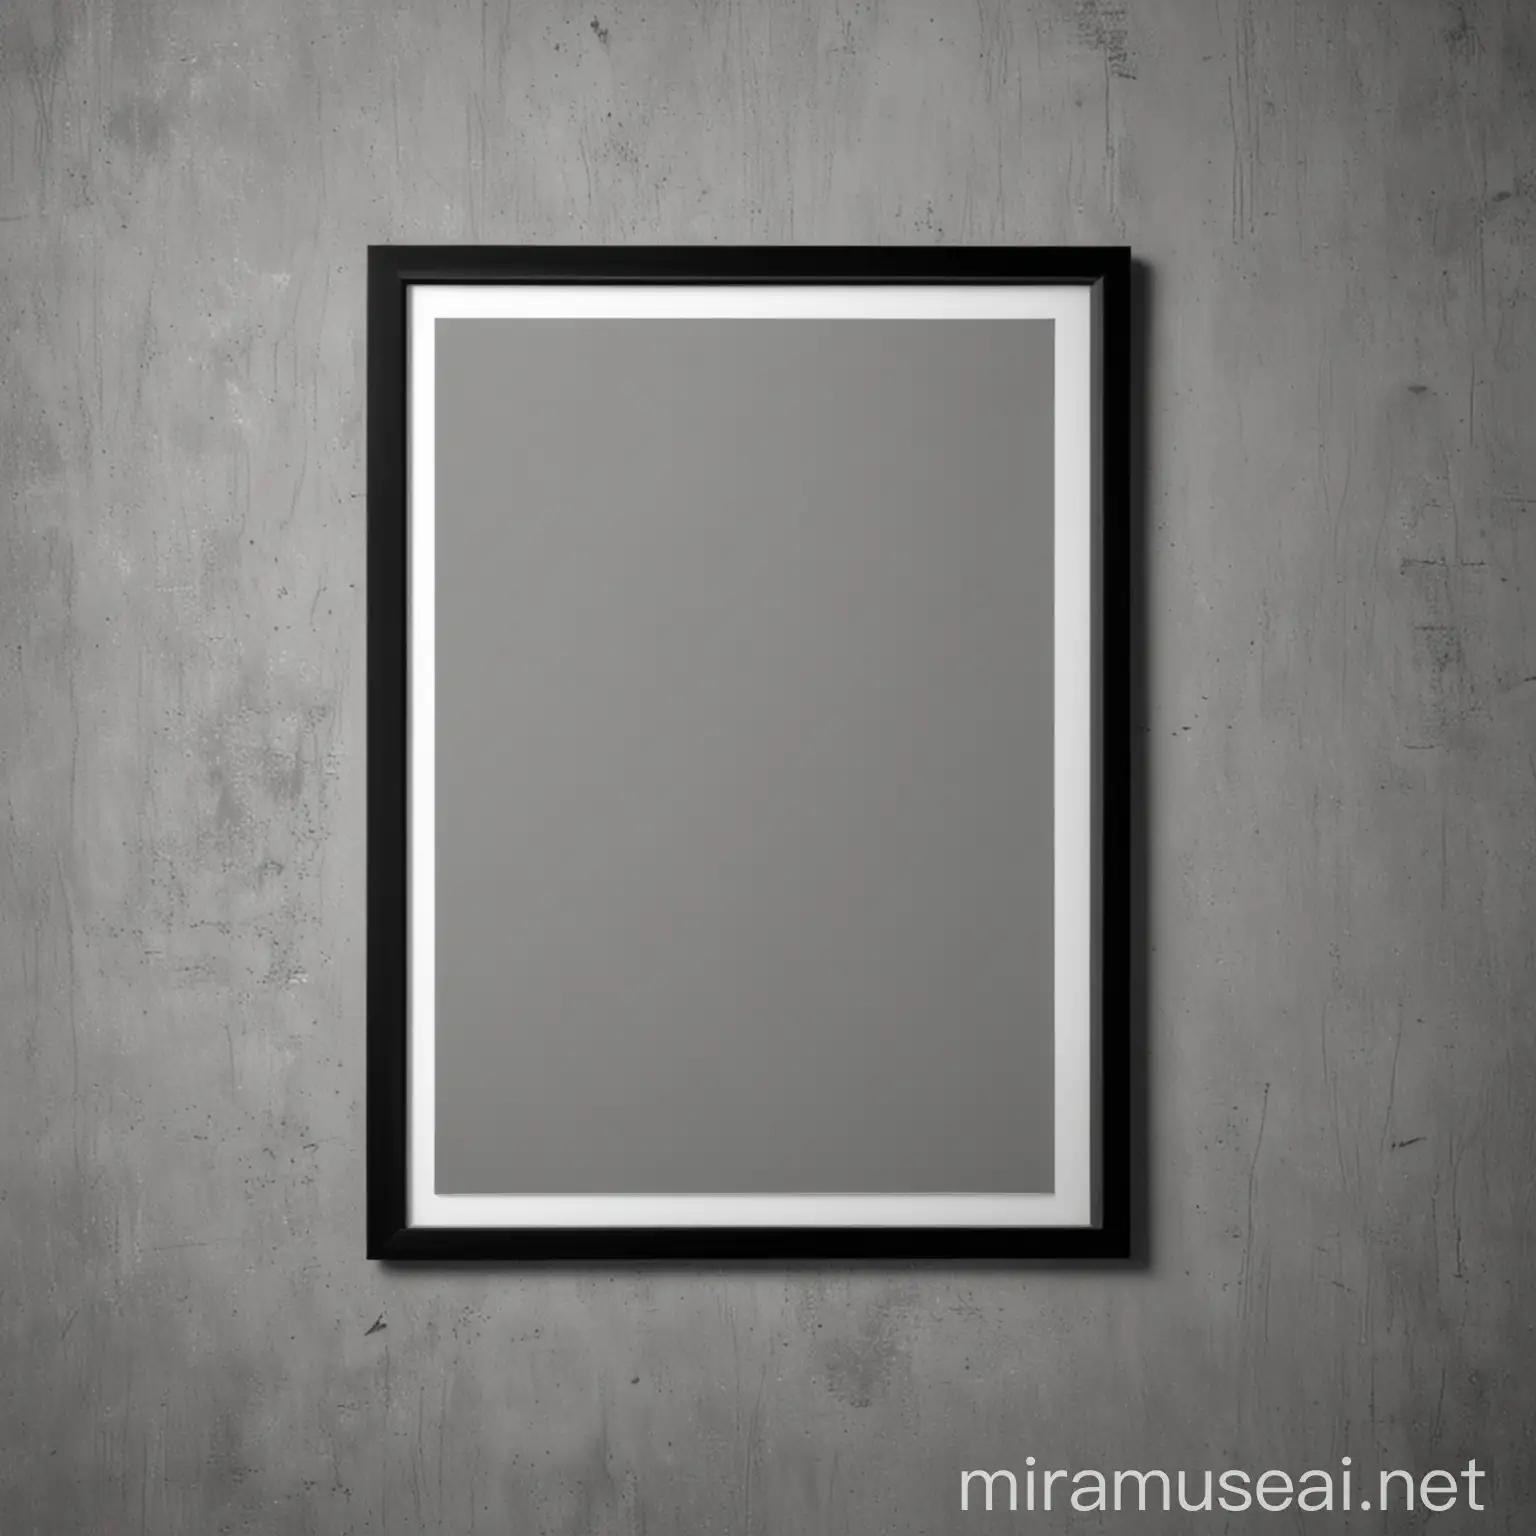 A4 black frame mockup on a gray wall